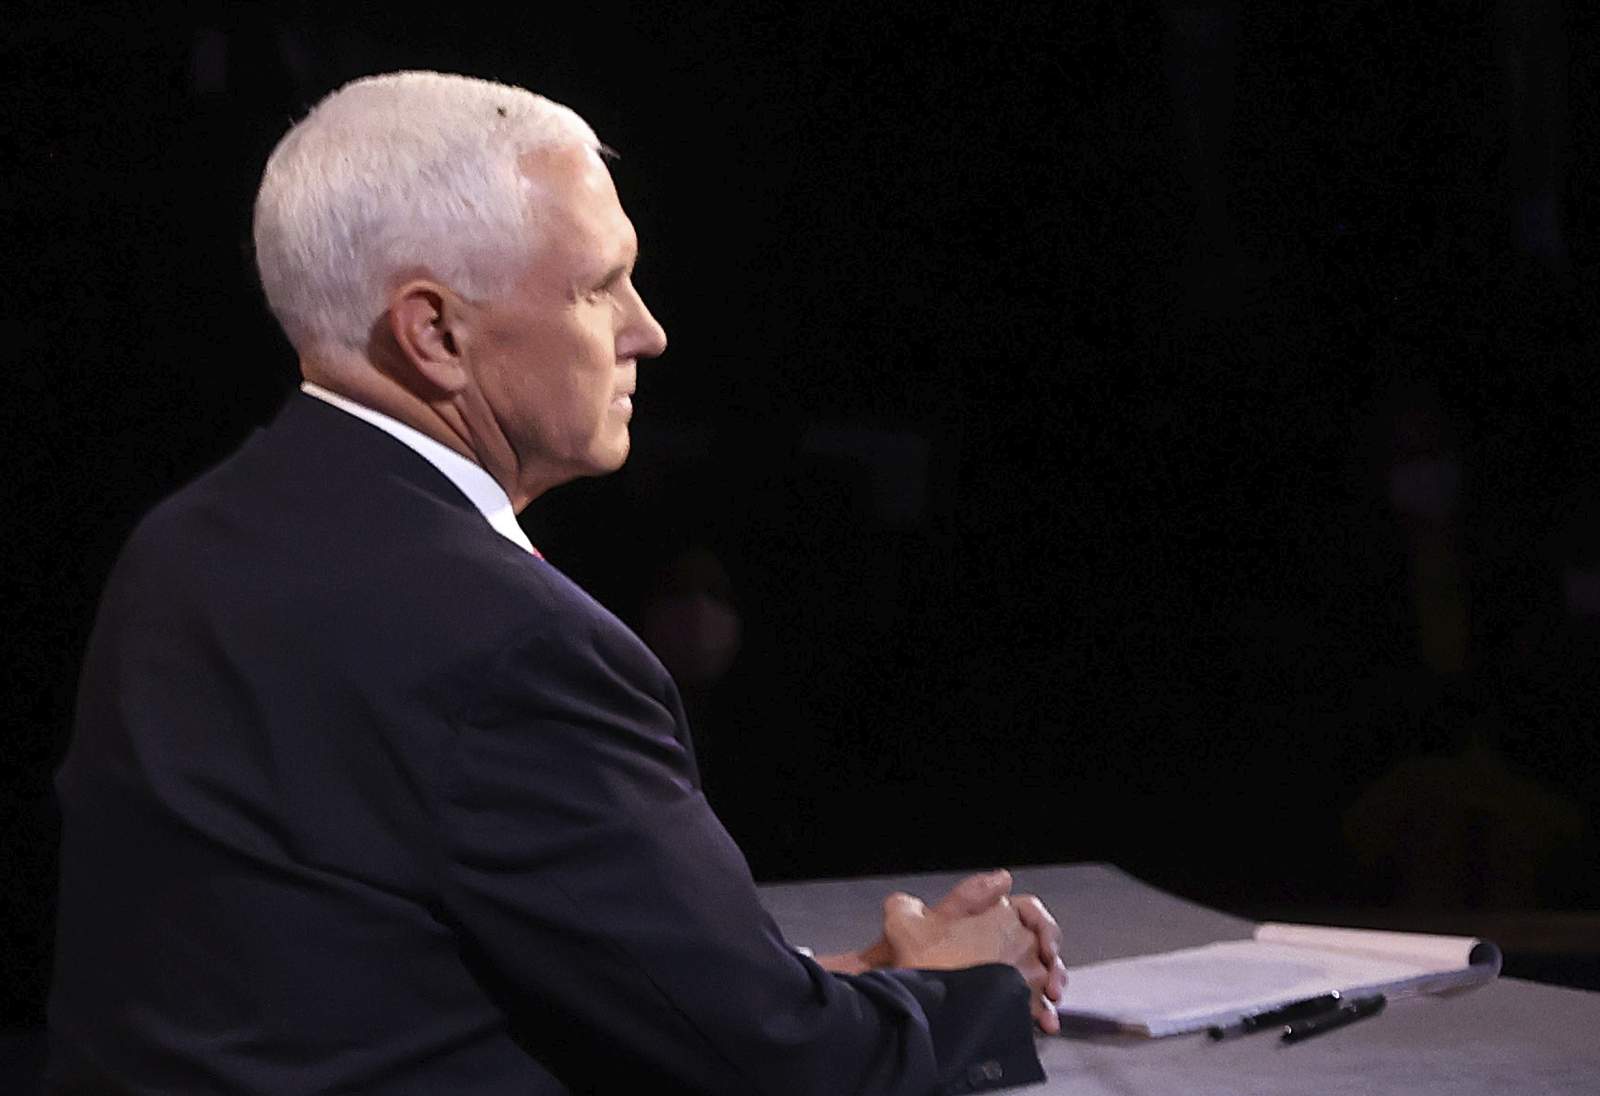 Fly on Pence’s head generates buzz in VP debate